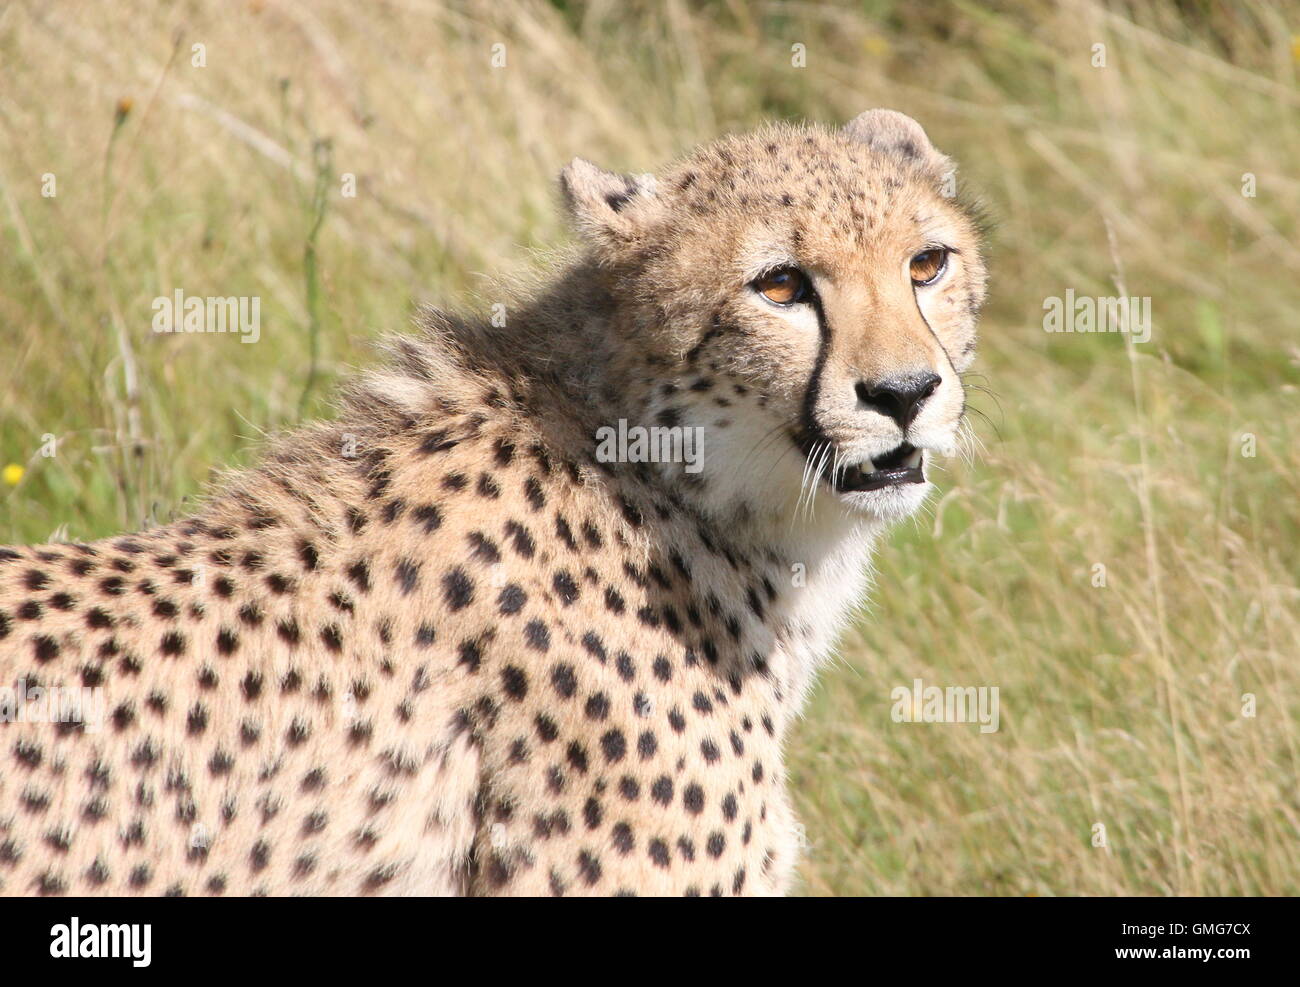 Male Cheetah (Acinonyx jubatus) close-up of upper body and head, snarling. Stock Photo